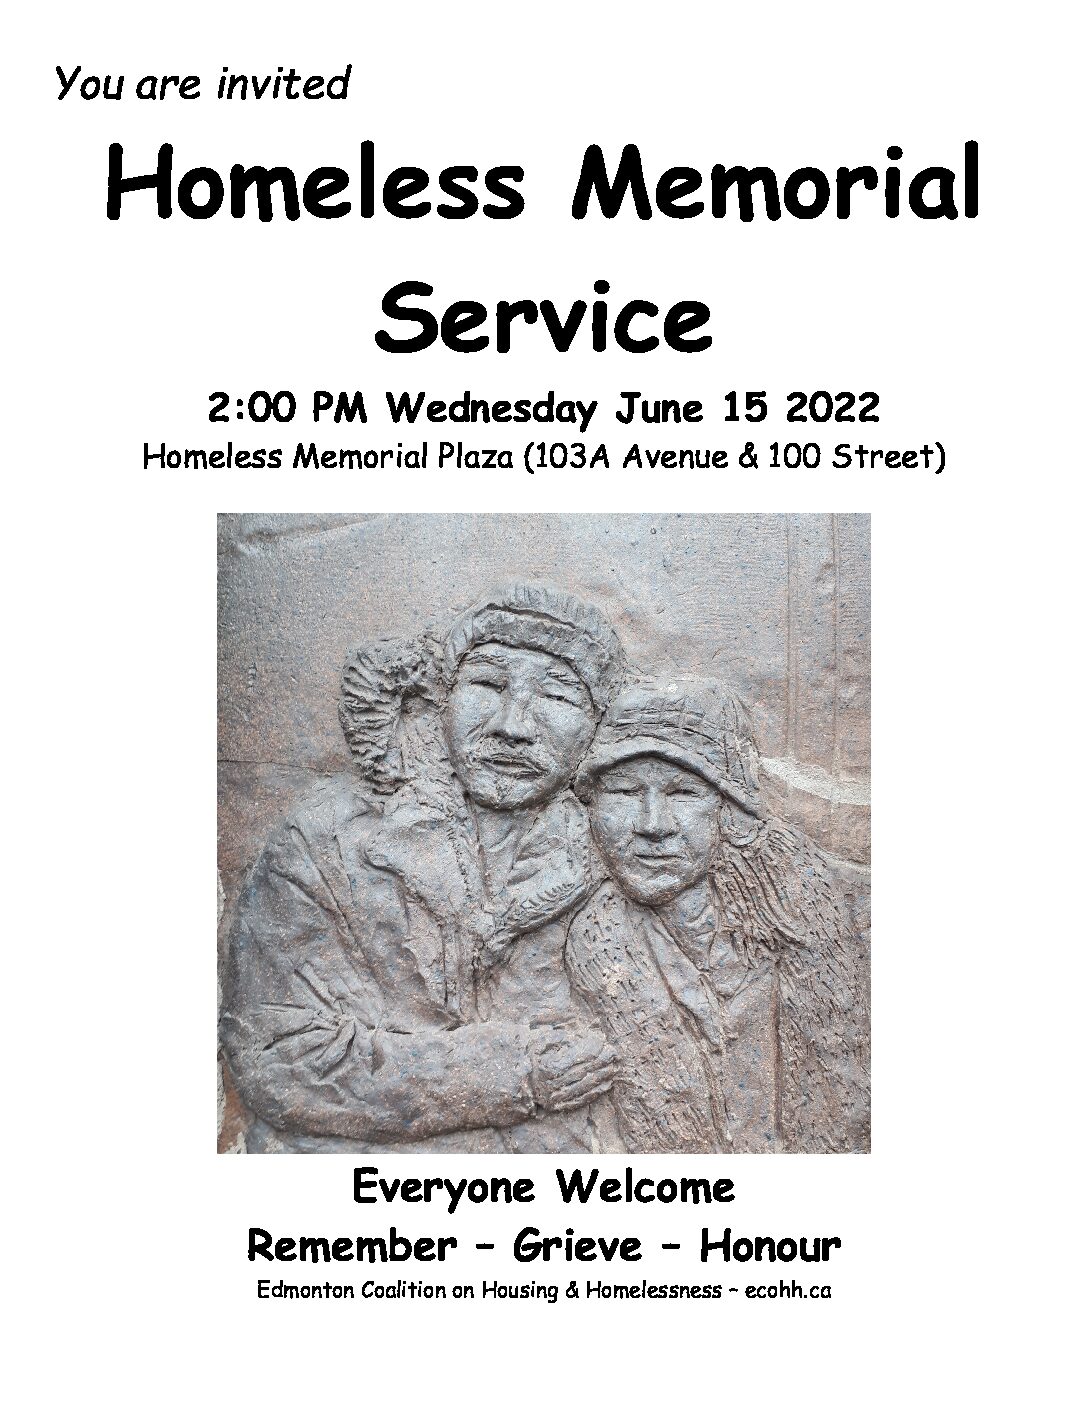 Homeless Memorial Service Edmonton